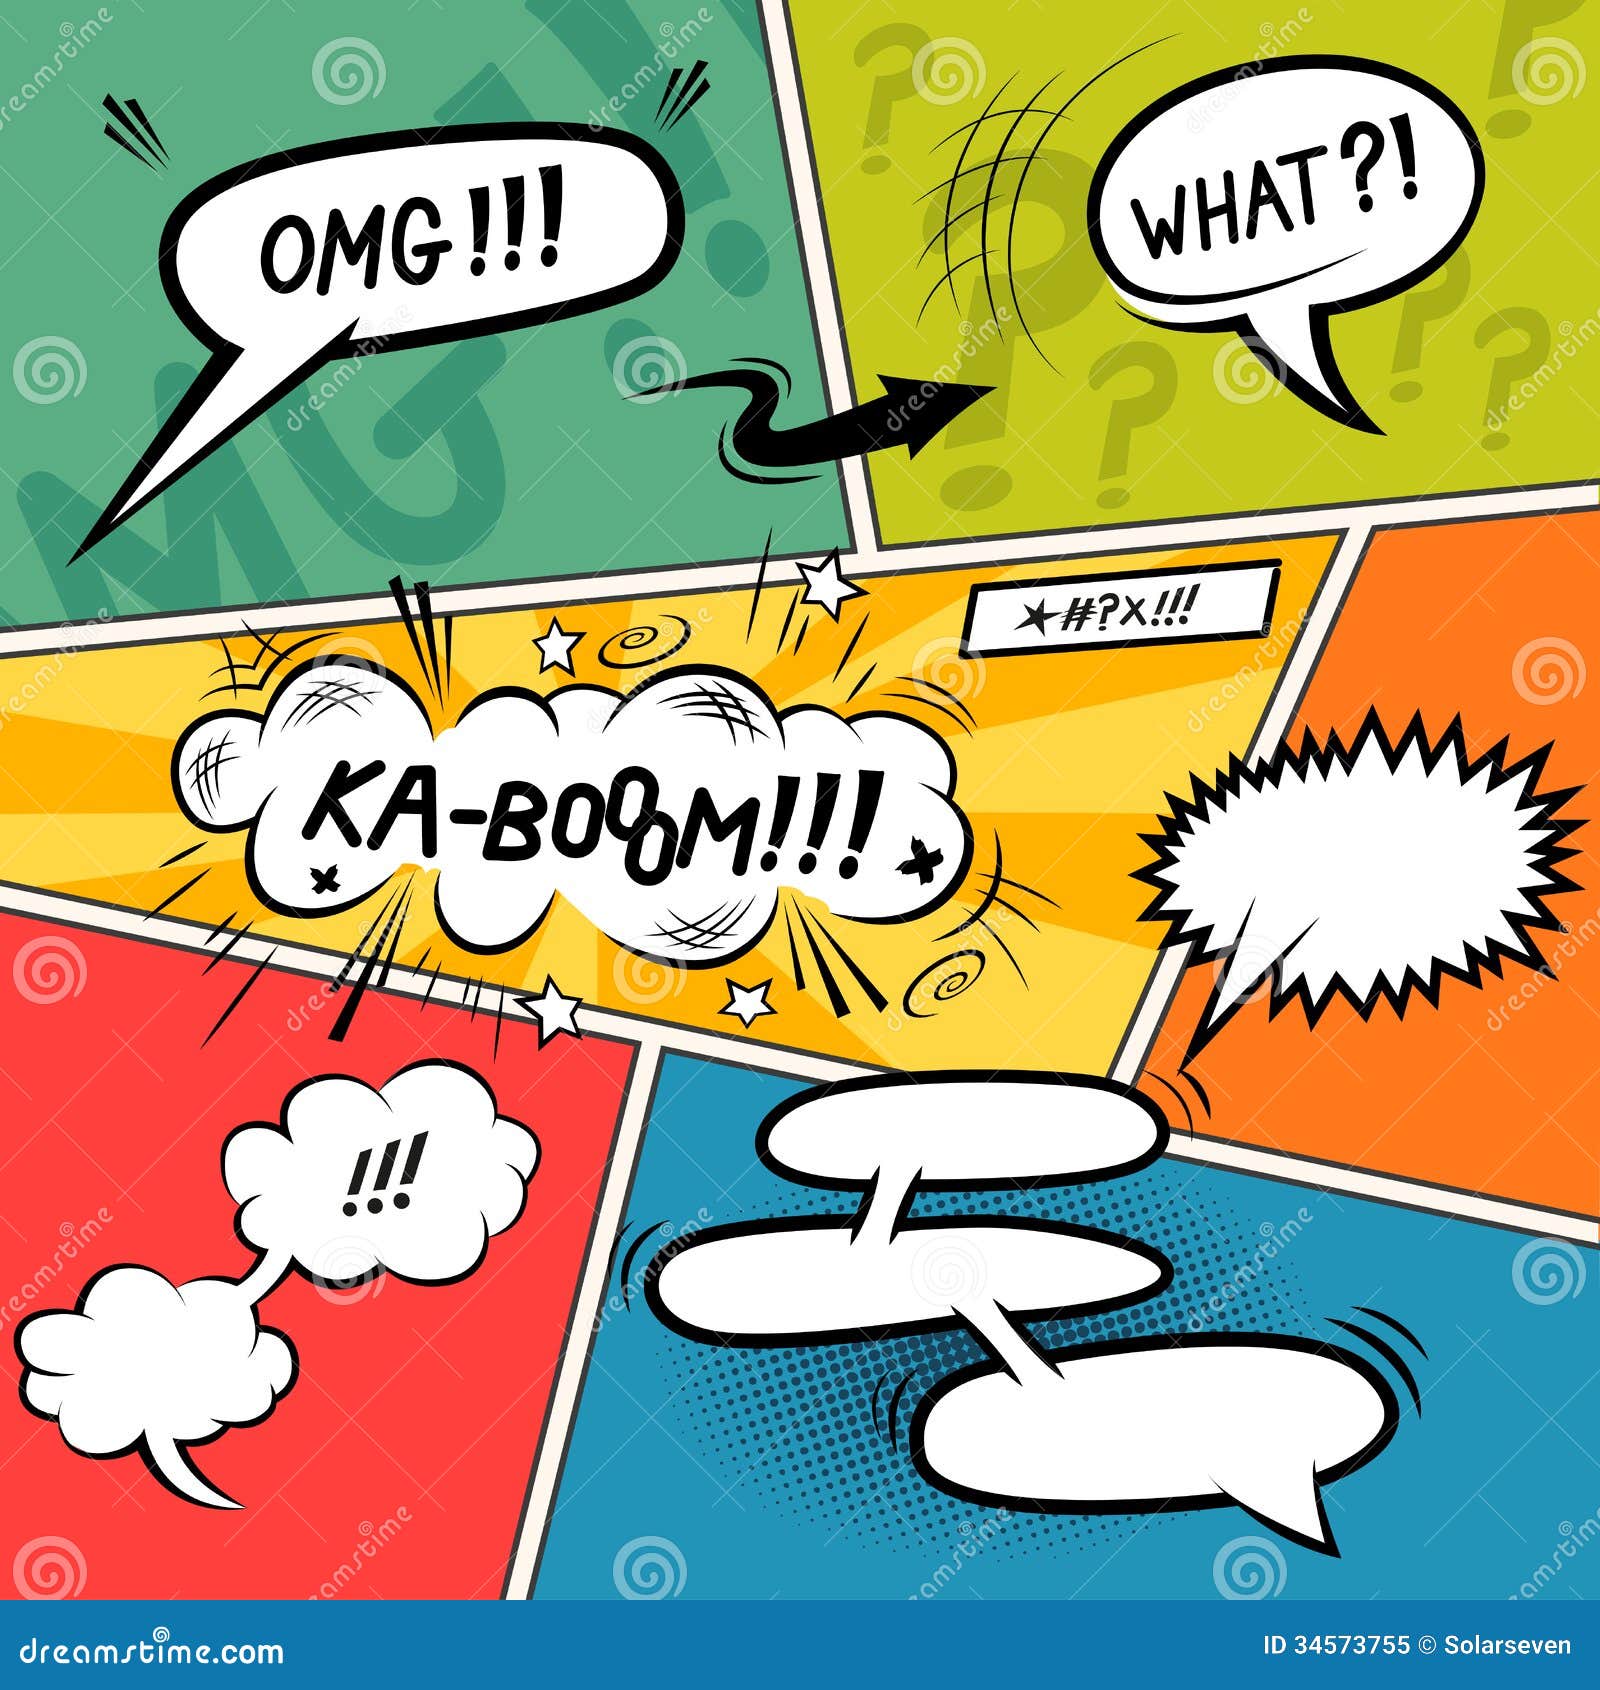 comic-strip-speech-bubbles-layered-vector-illustration-34573755.jpg